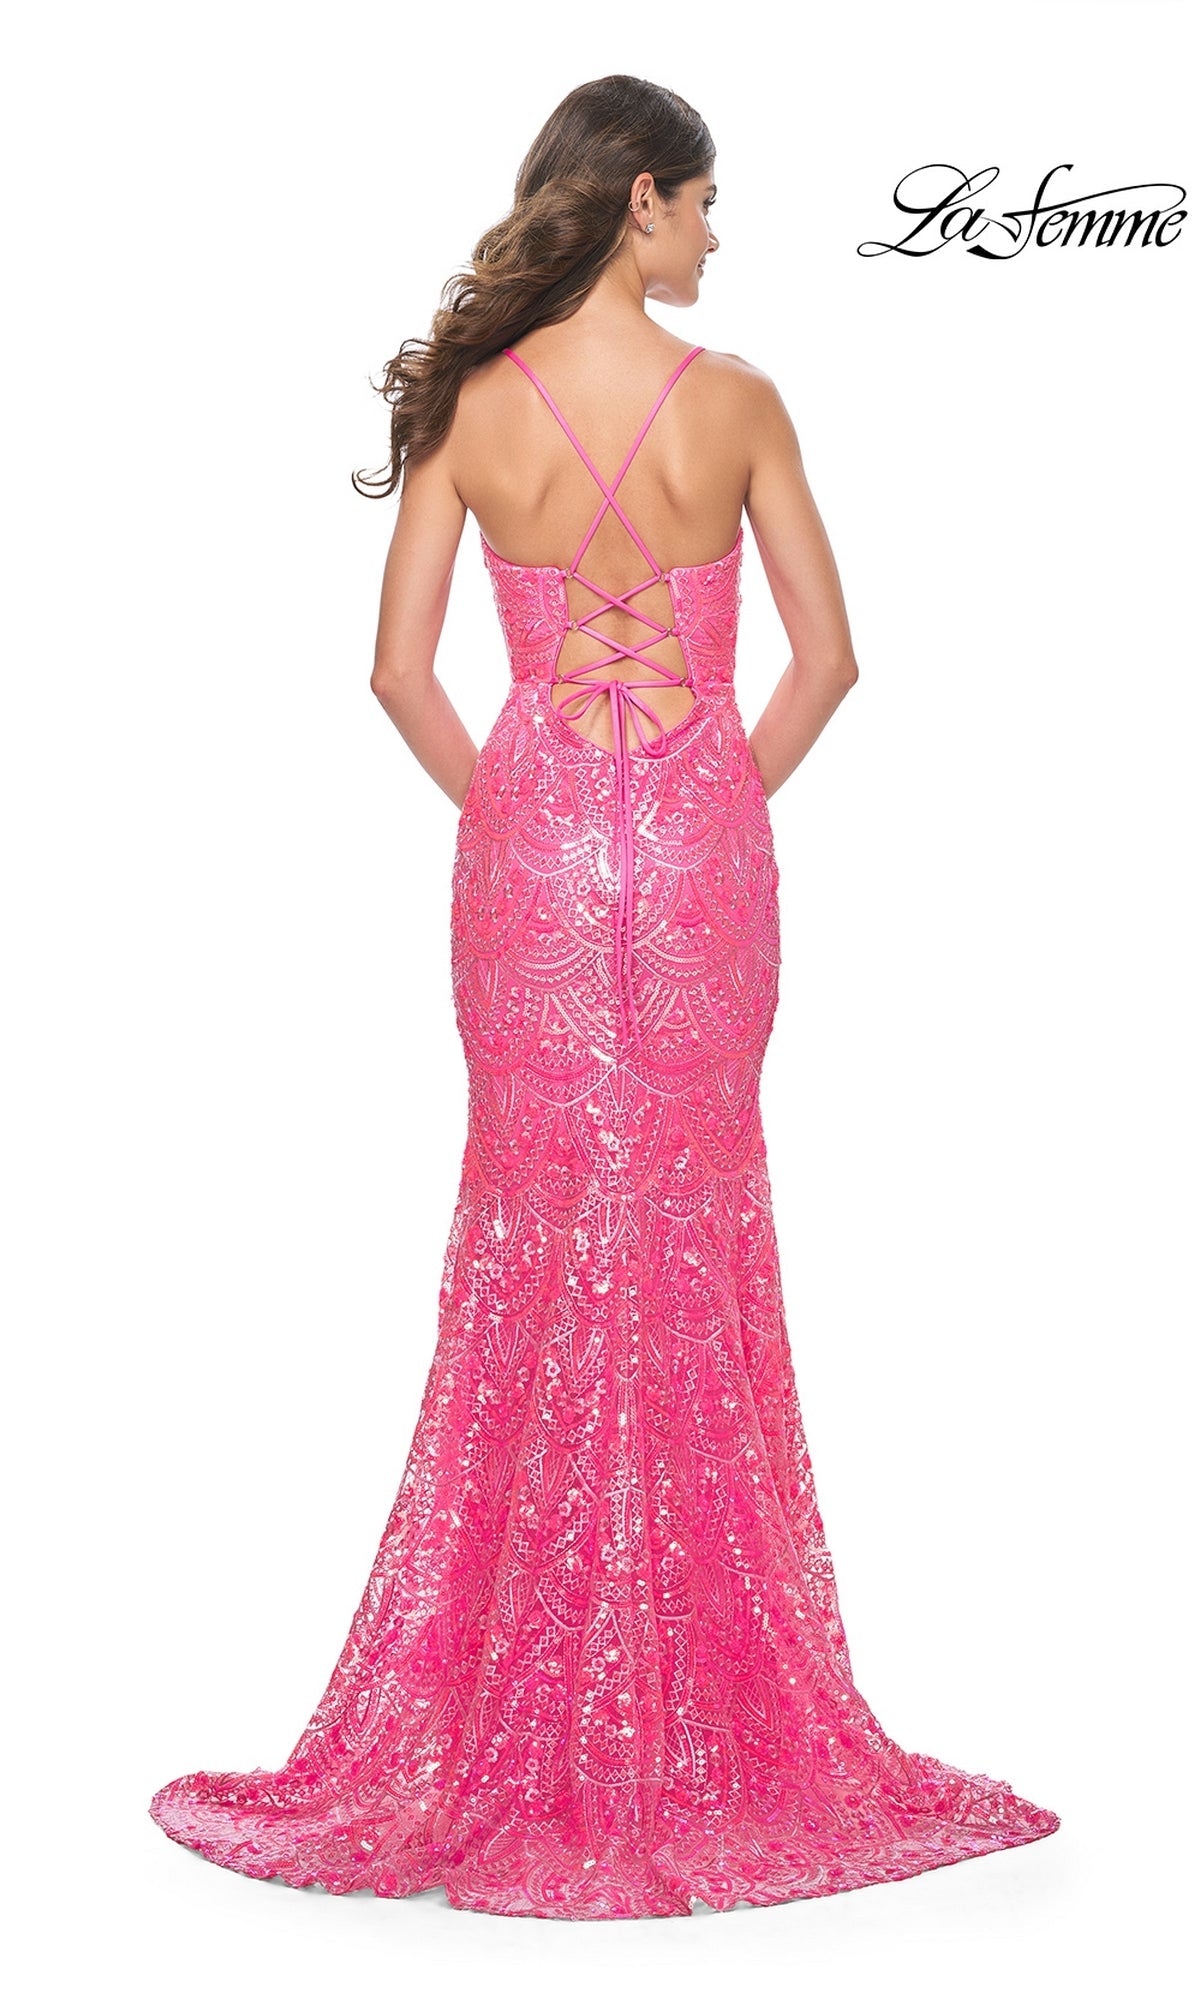  La Femme 31865 Formal Prom Dress